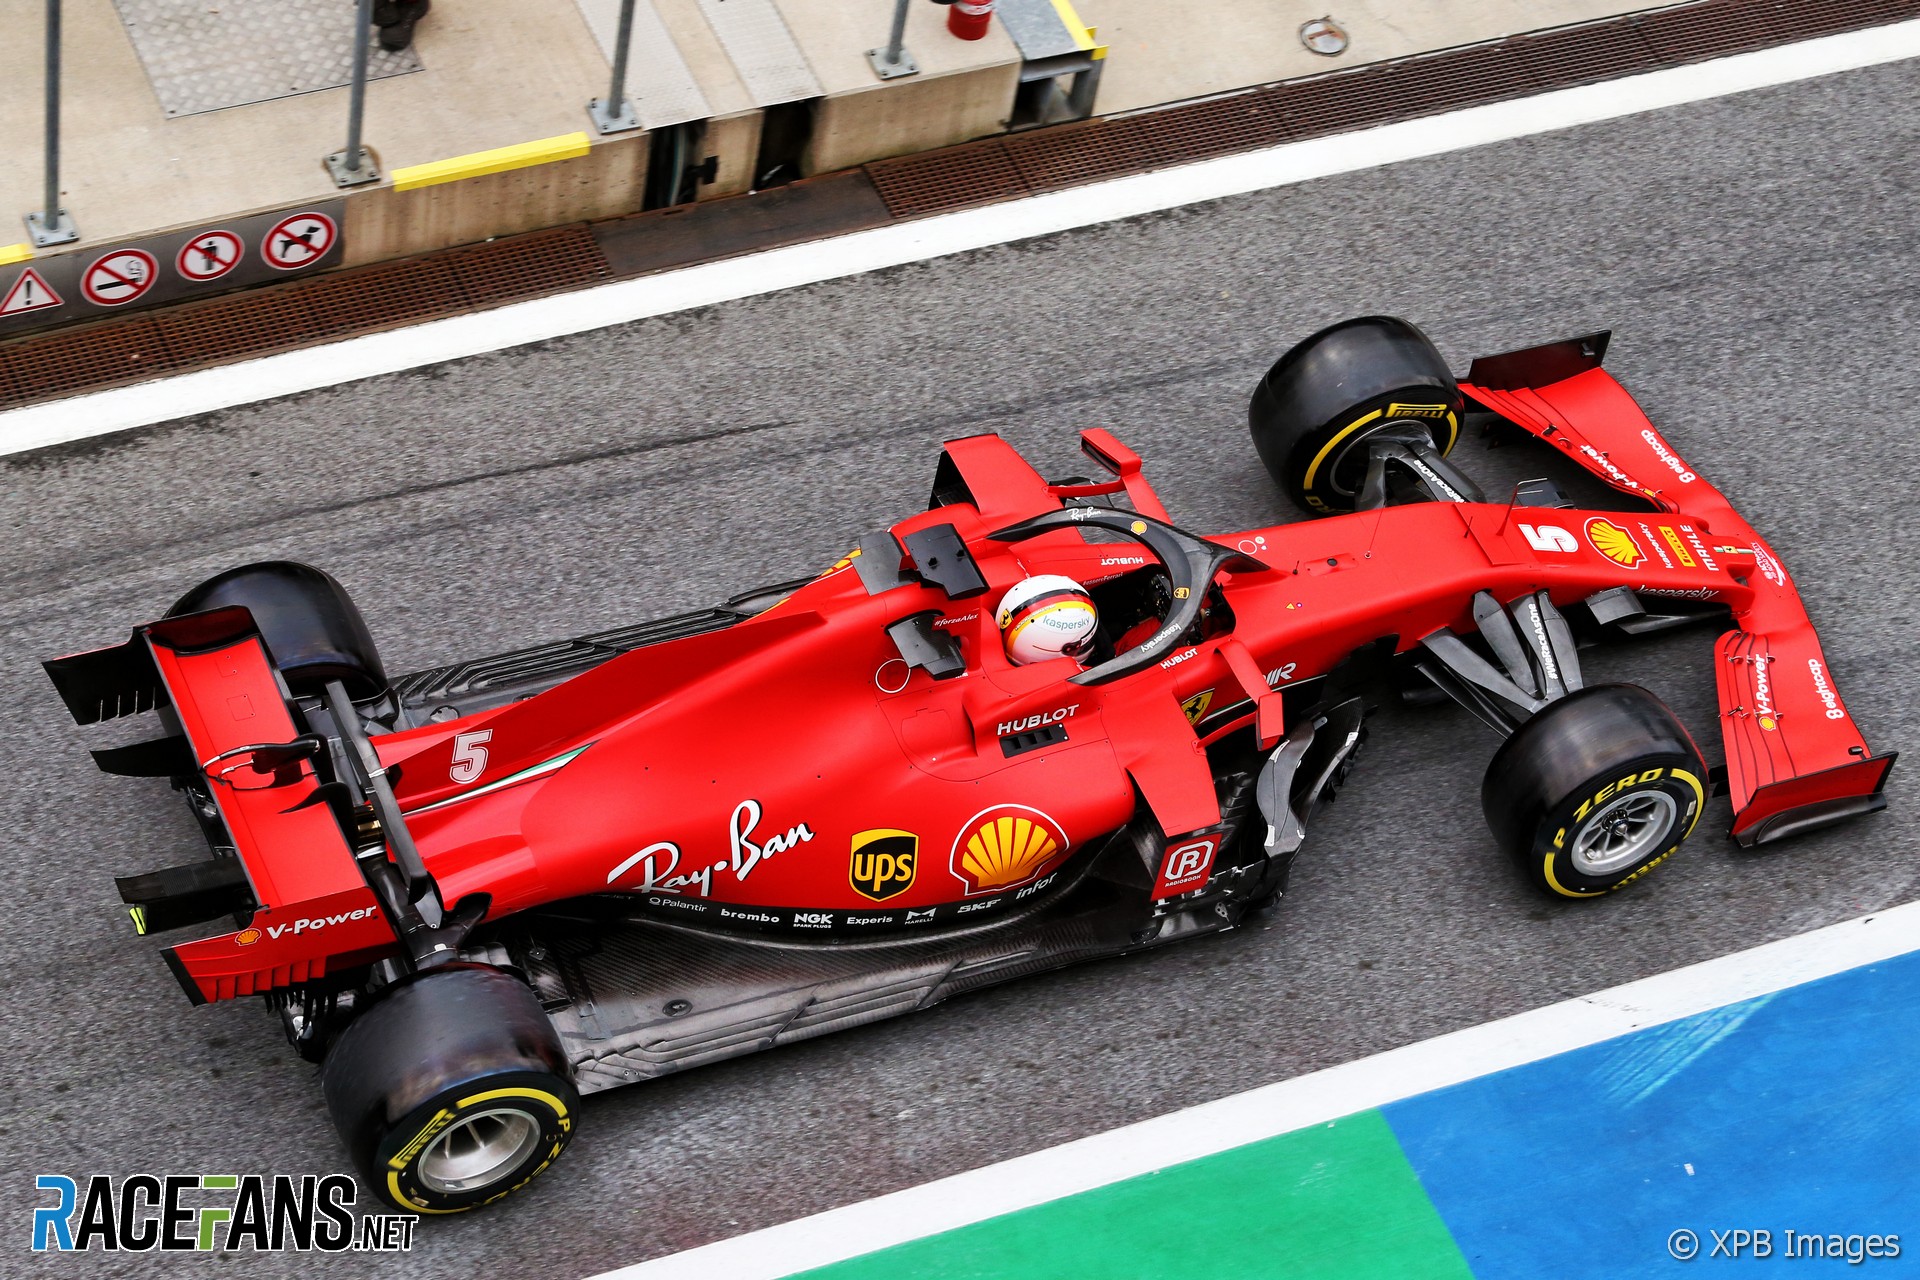 FIA likely to probe new Ferrari F1 car over design which Mercedes